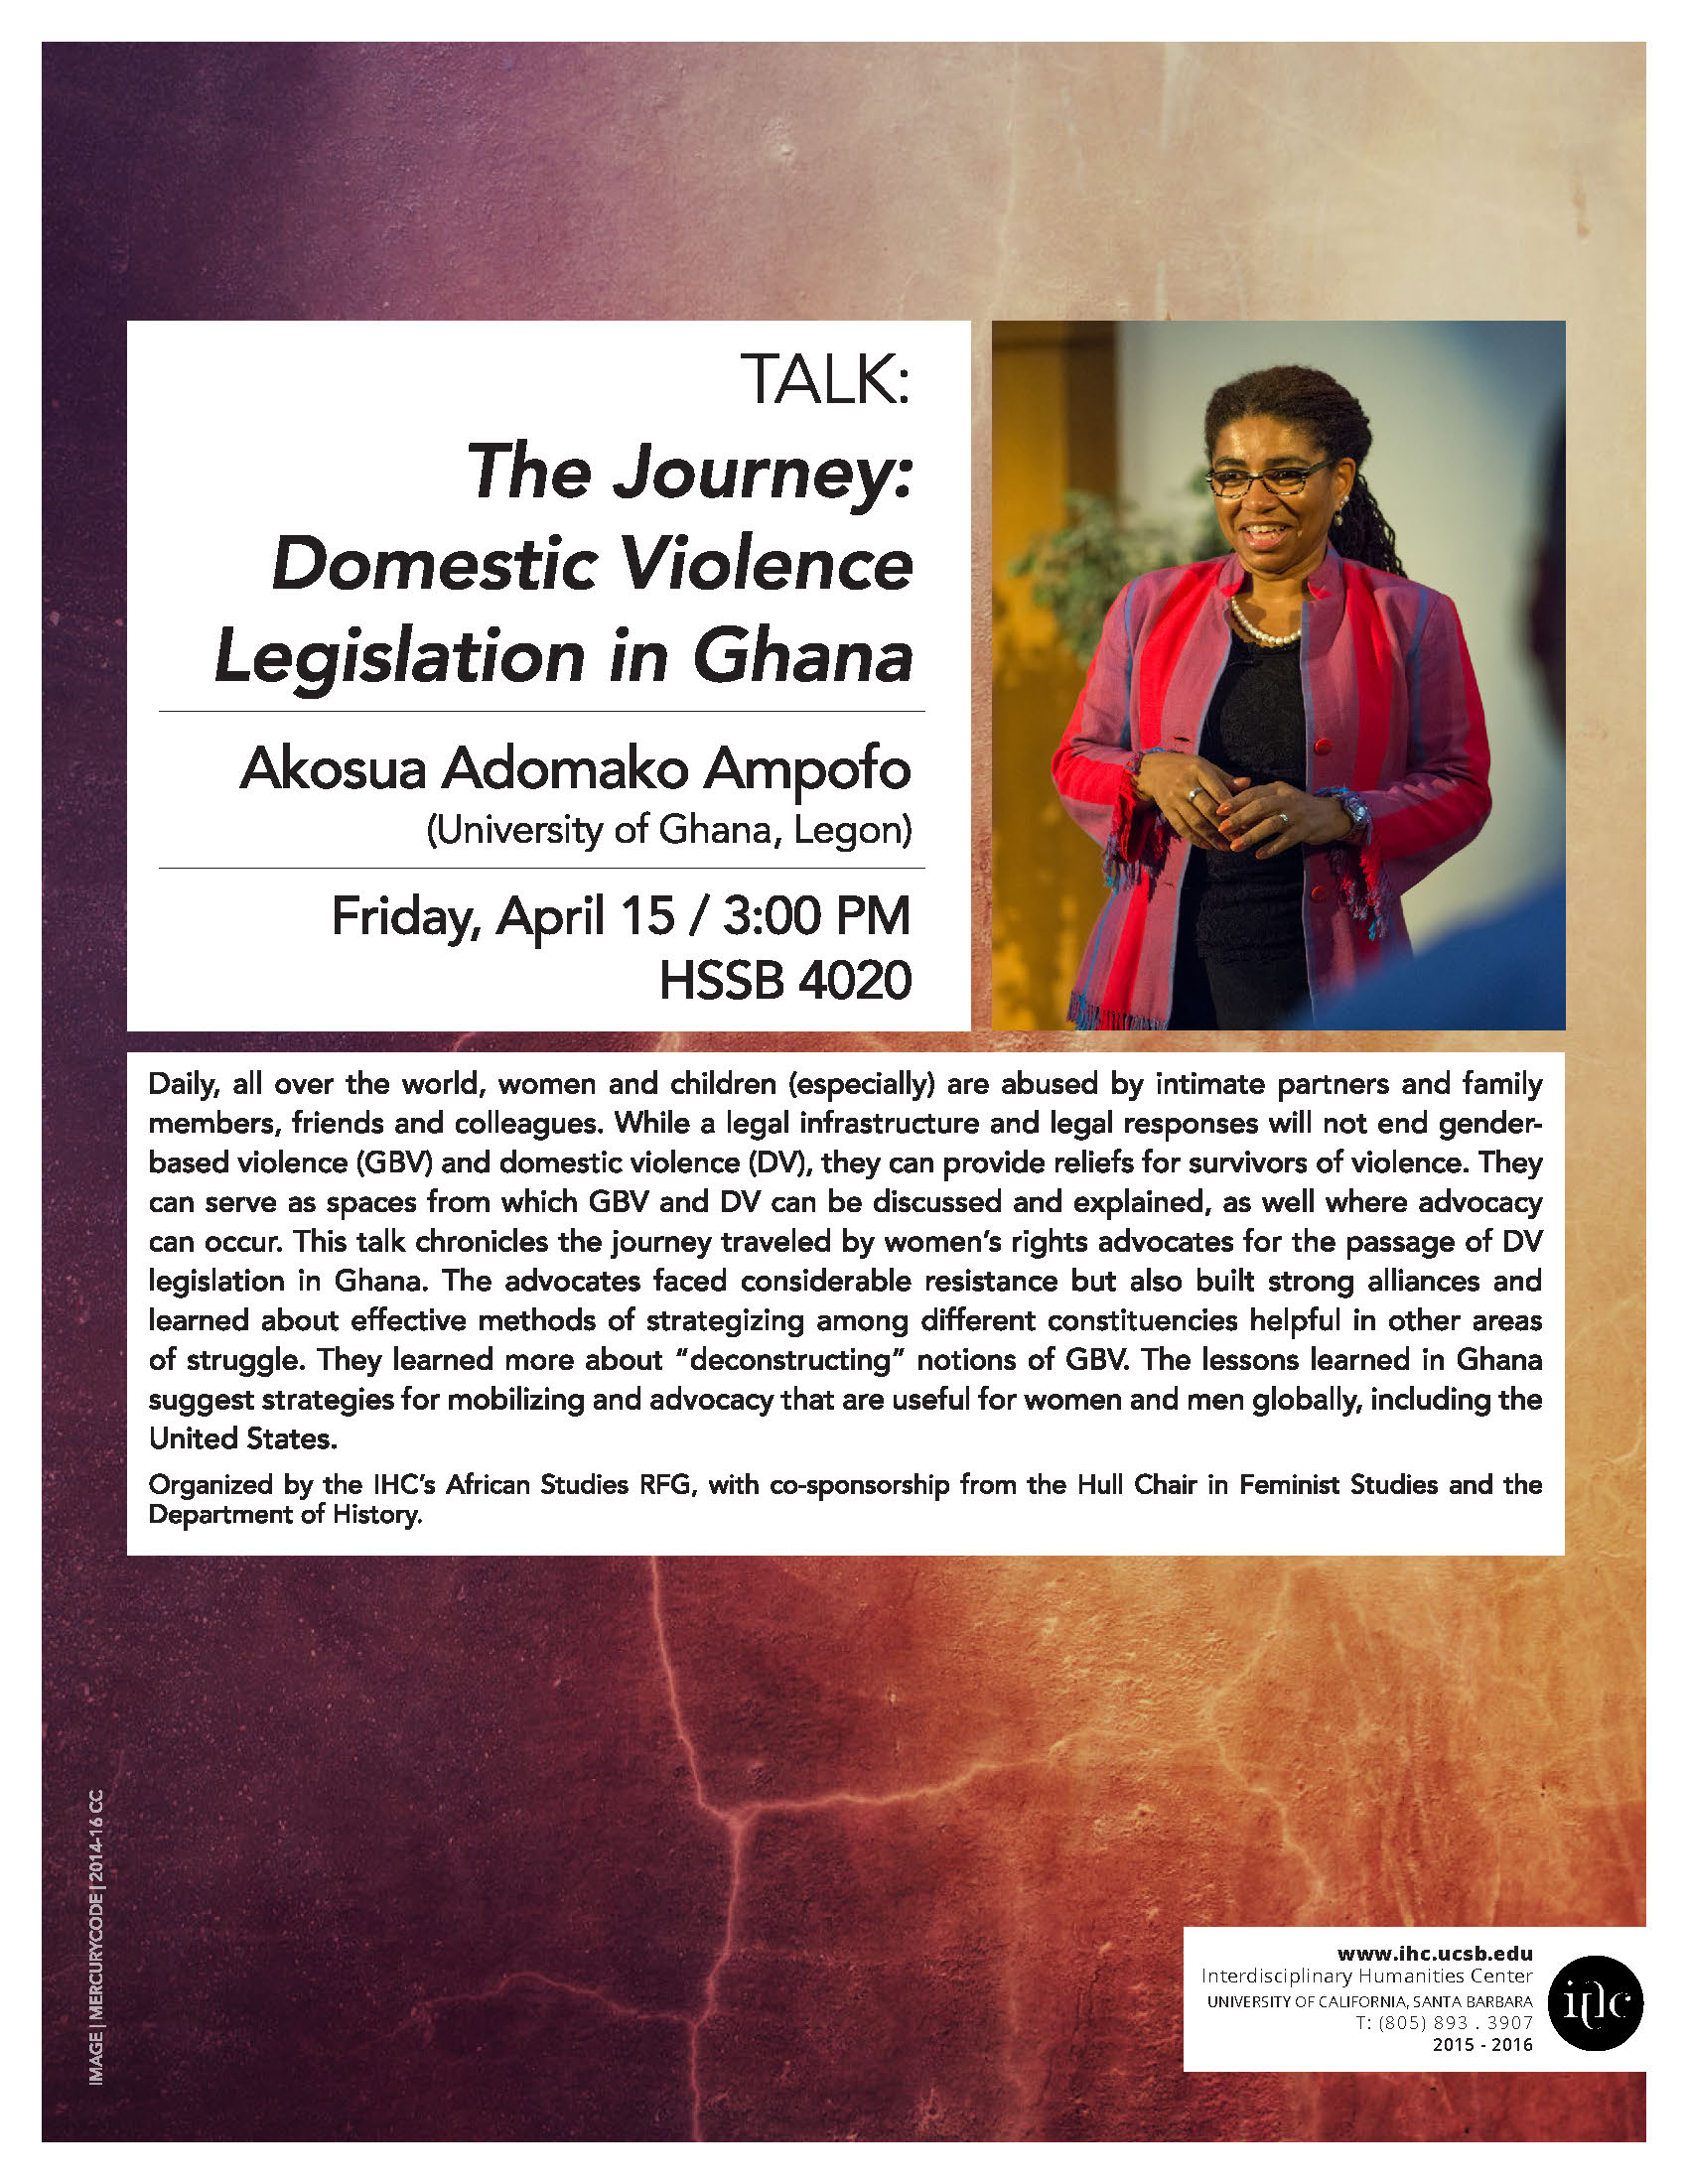 flyer for "The Journey: Domestic Violence Legislation in Ghana" by Prof. Akosua Adomako Ampofo